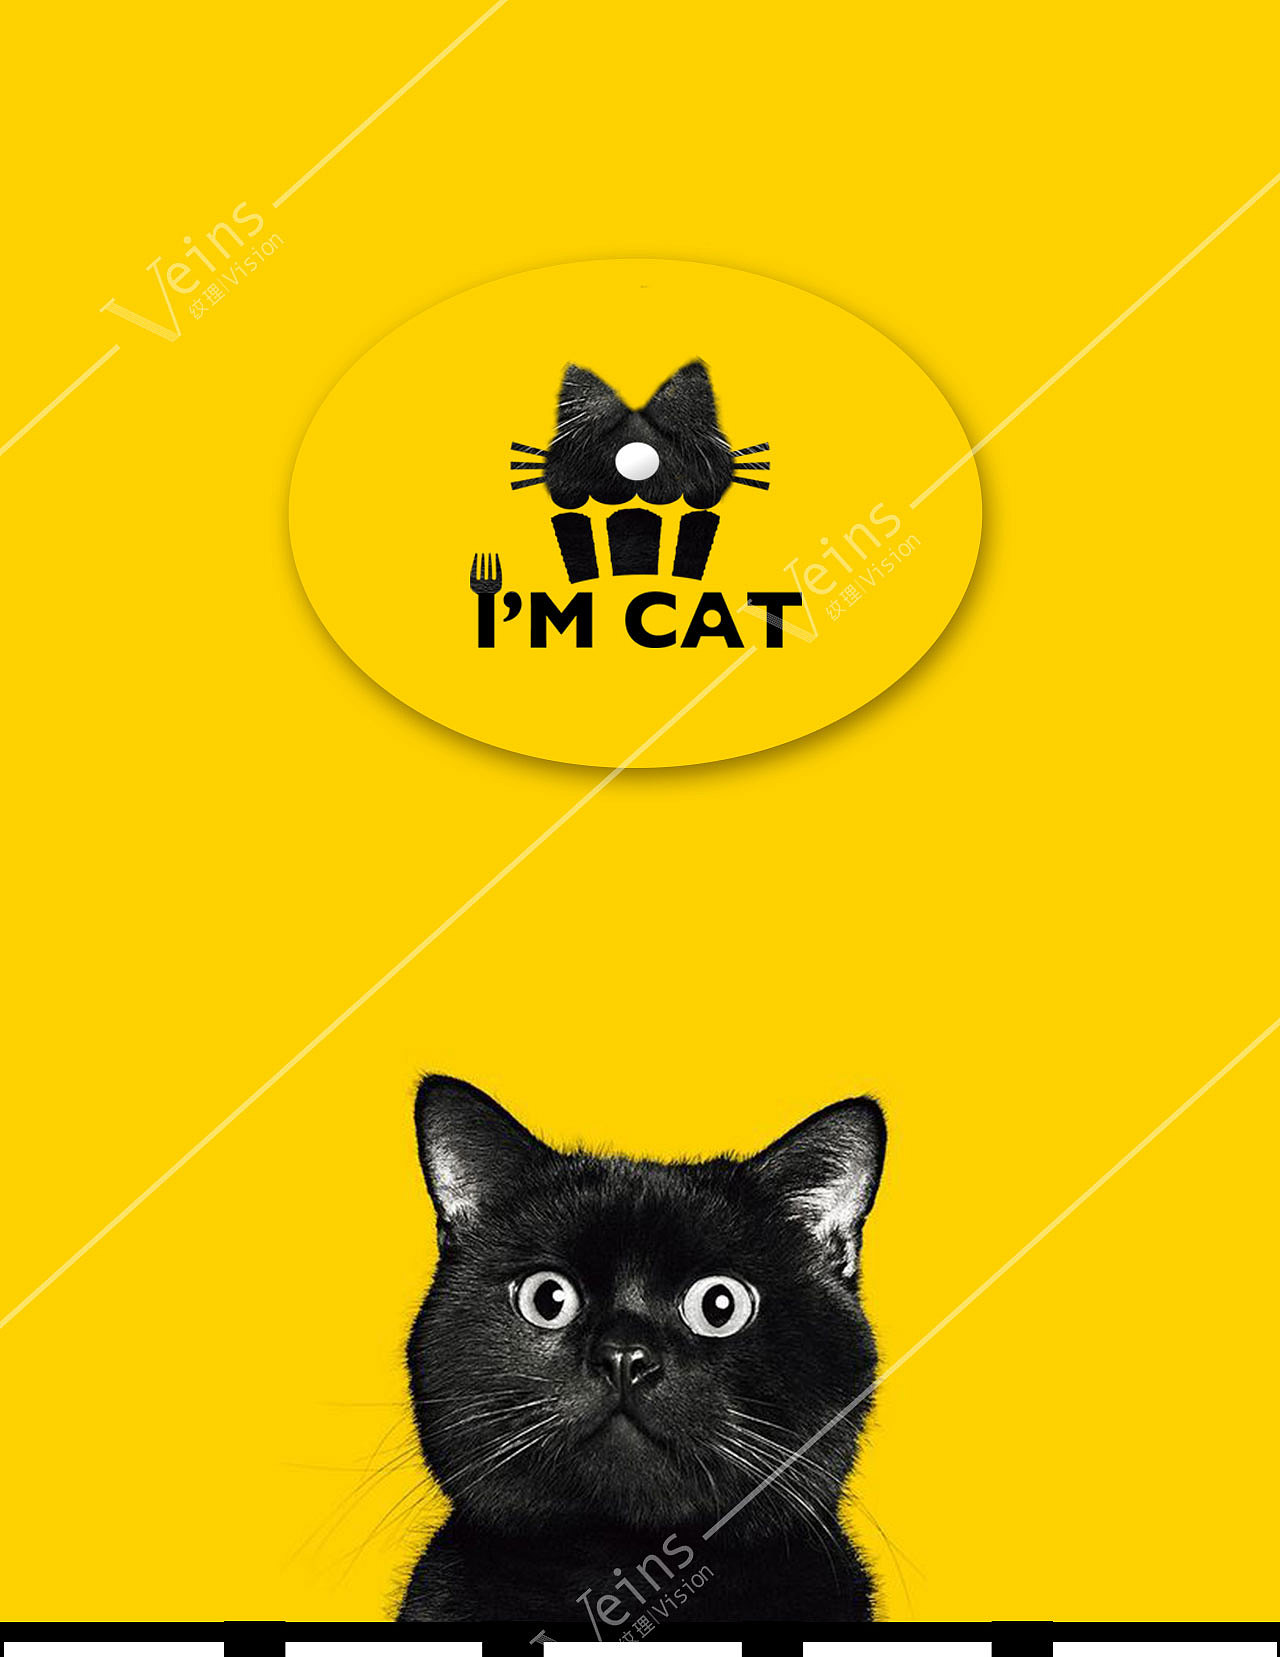 i"m cat猫主题蛋糕定制工坊视觉vi品牌标志logo设计